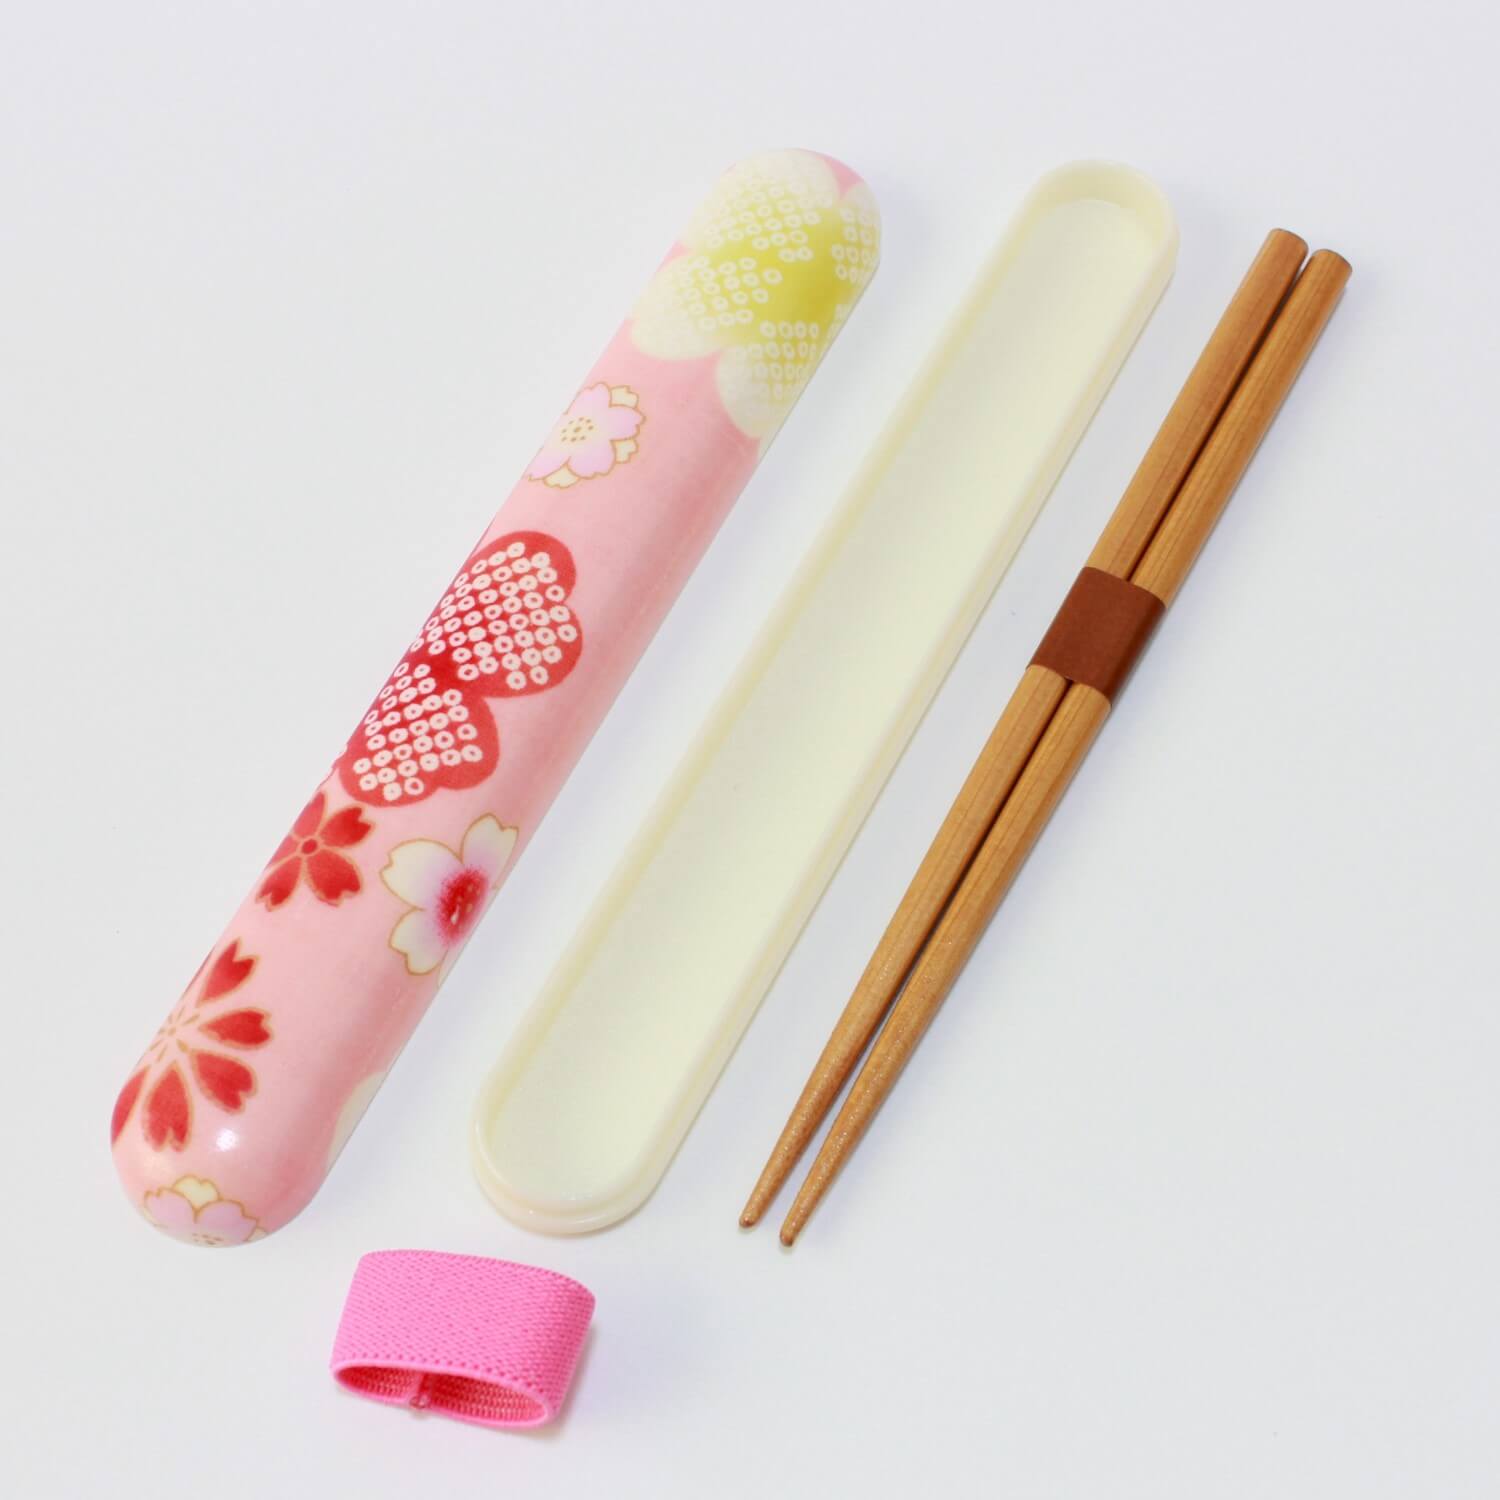 yume sakura chopsticks case opened with wood chopsticks